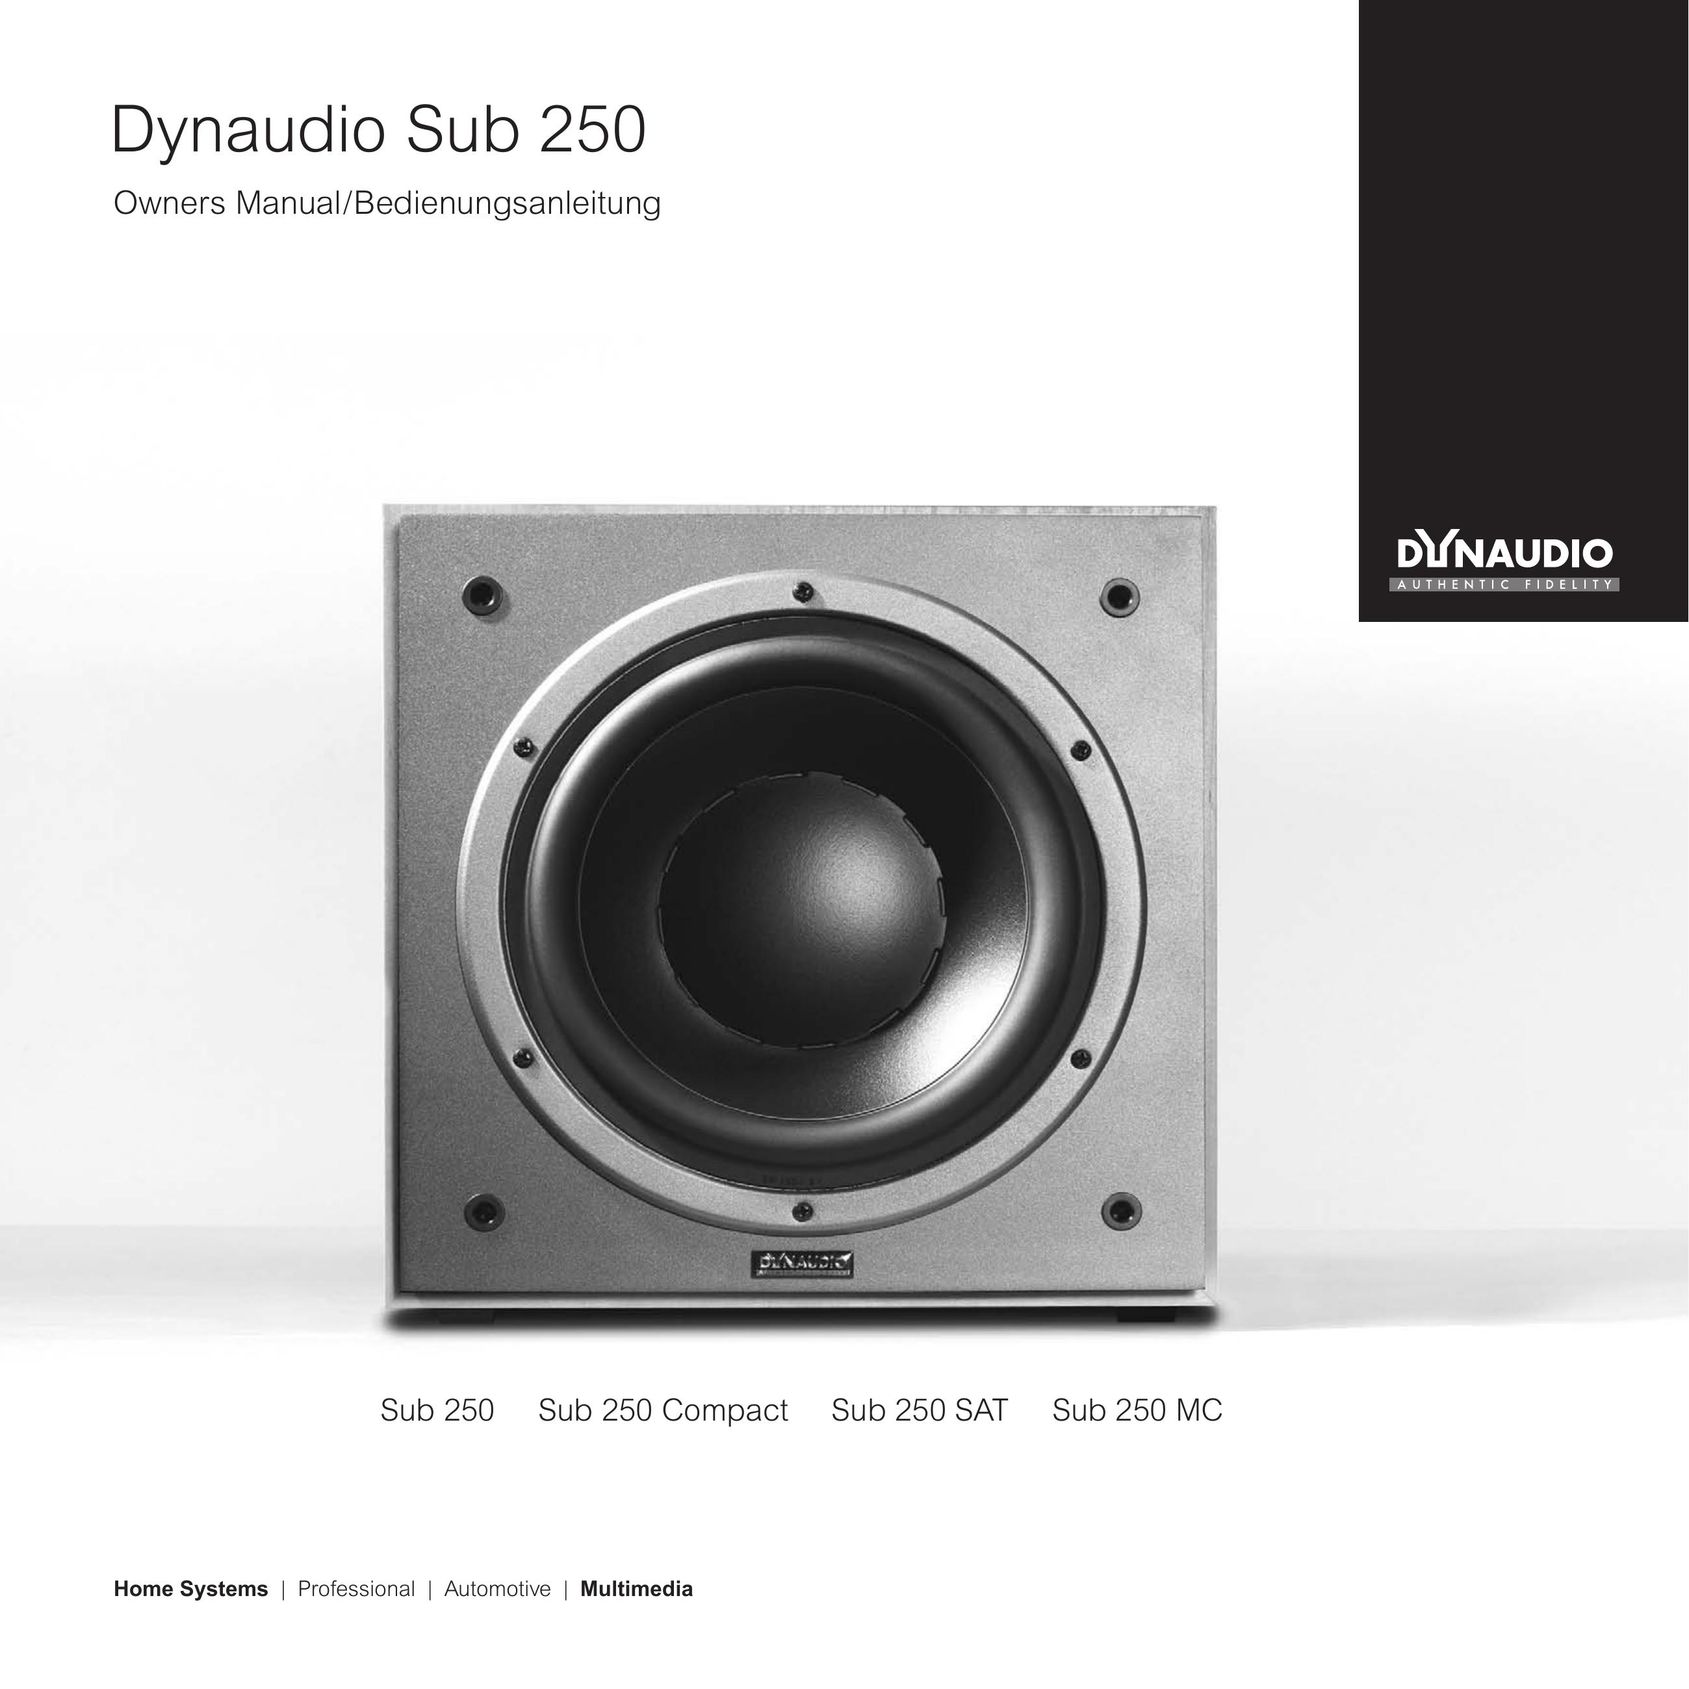 Dynaudio SUB 250 MC Speaker User Manual